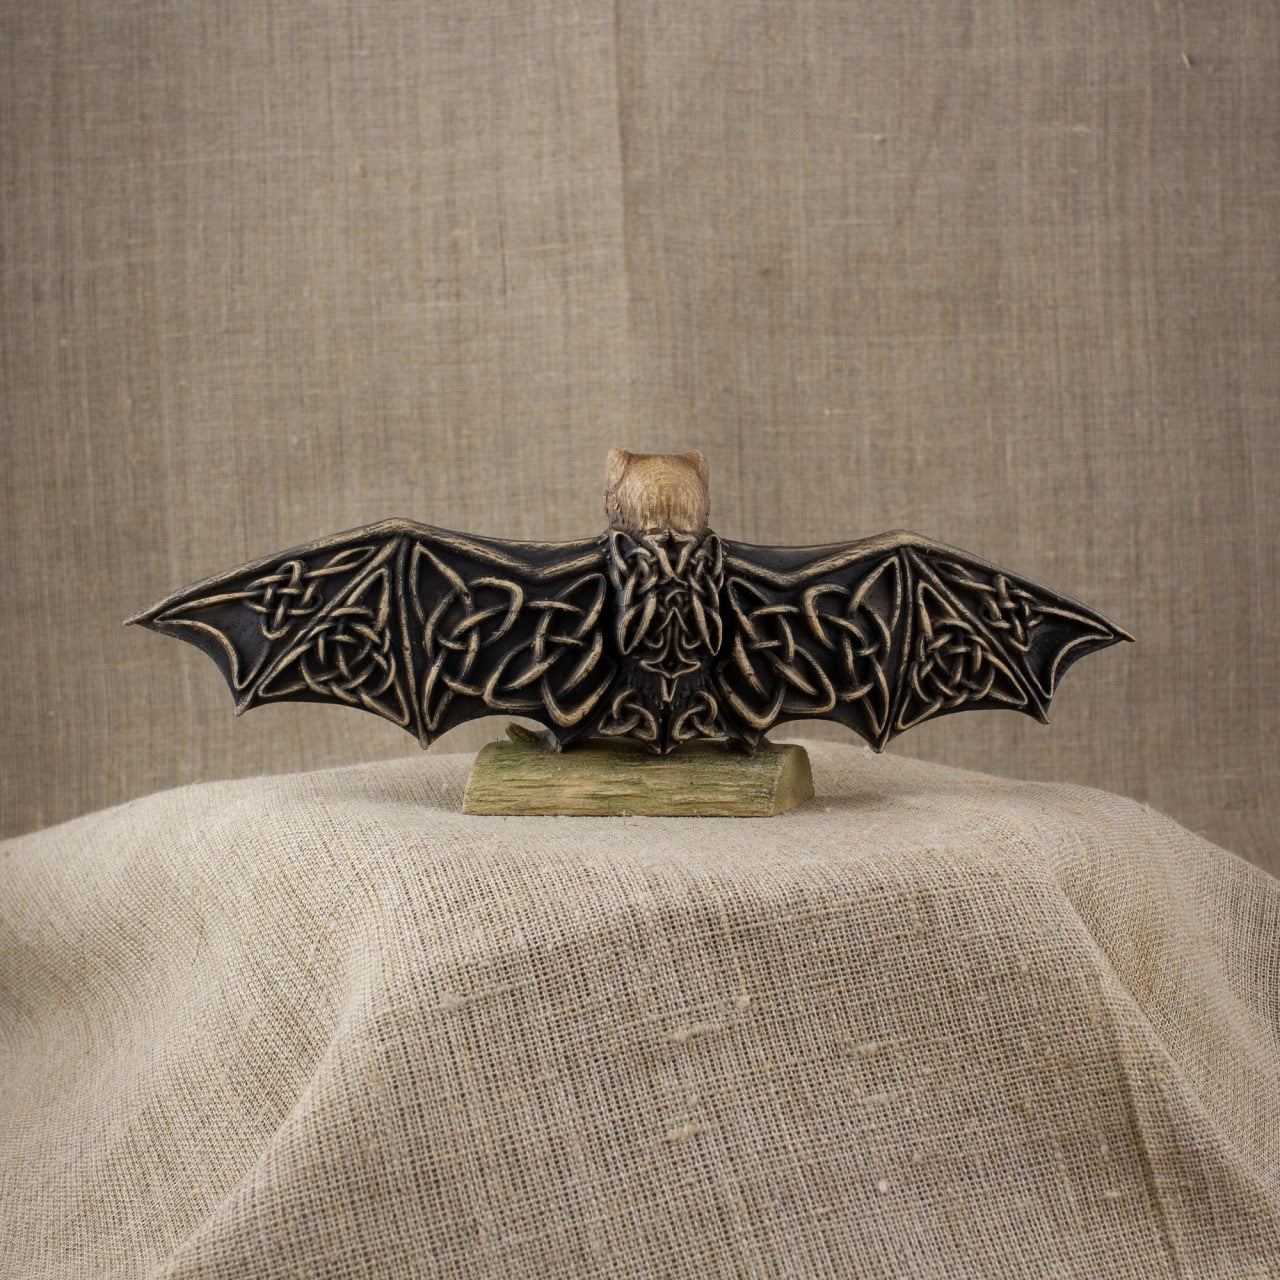 Enchanting Wooden Bat Sculpture: Capturing the Magic of Norse and Celtic Mythology